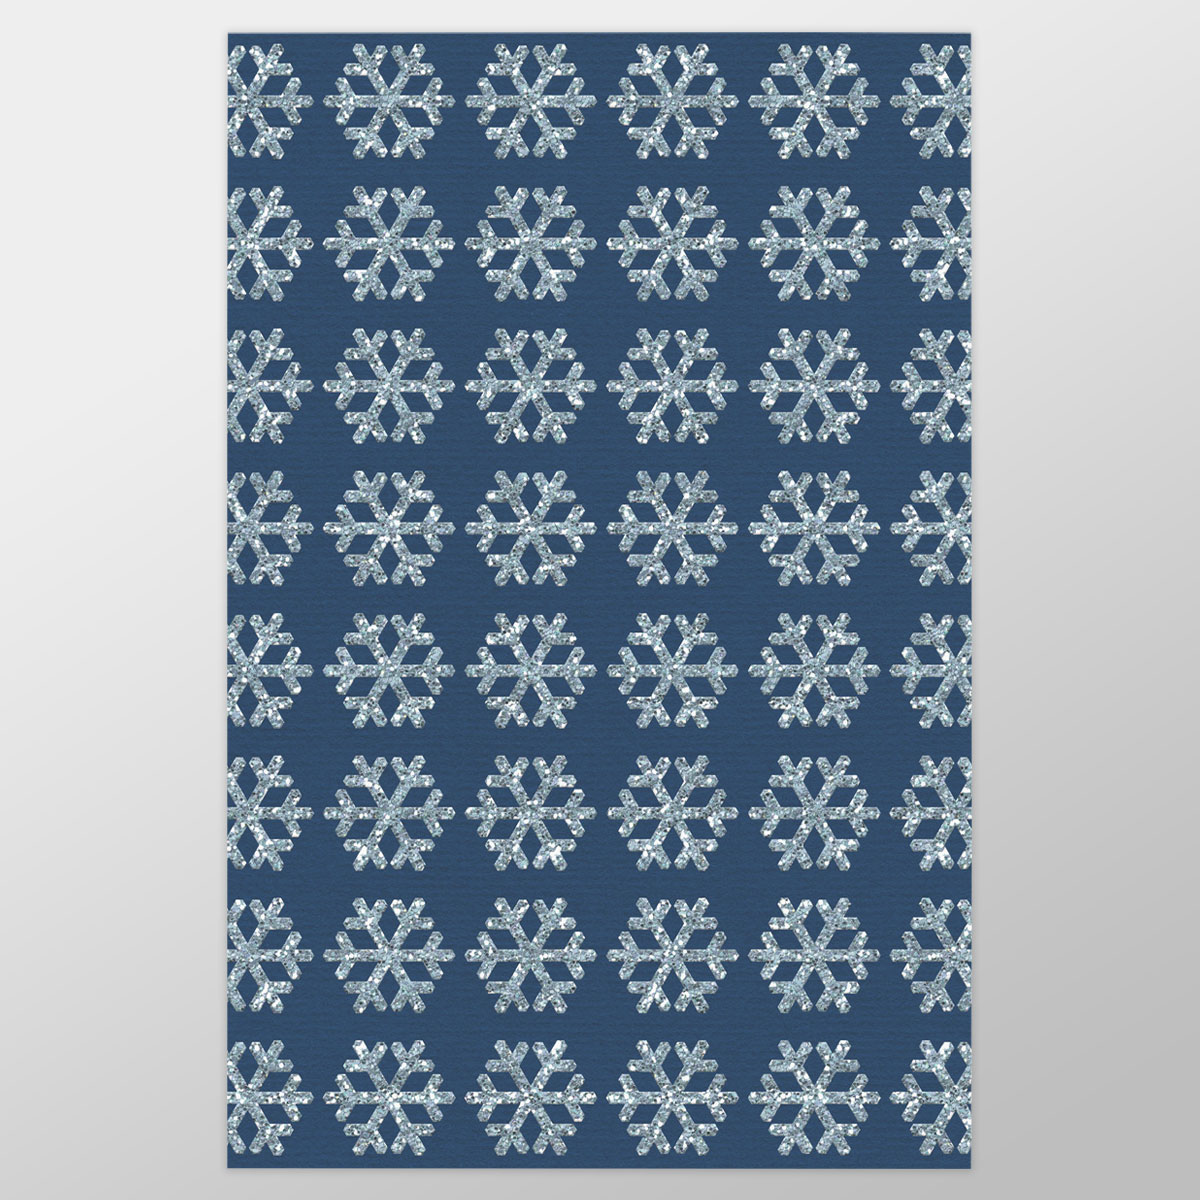 Snowflake, Snowflake Background, Snowflake Pattern 1 Wrapping Paper